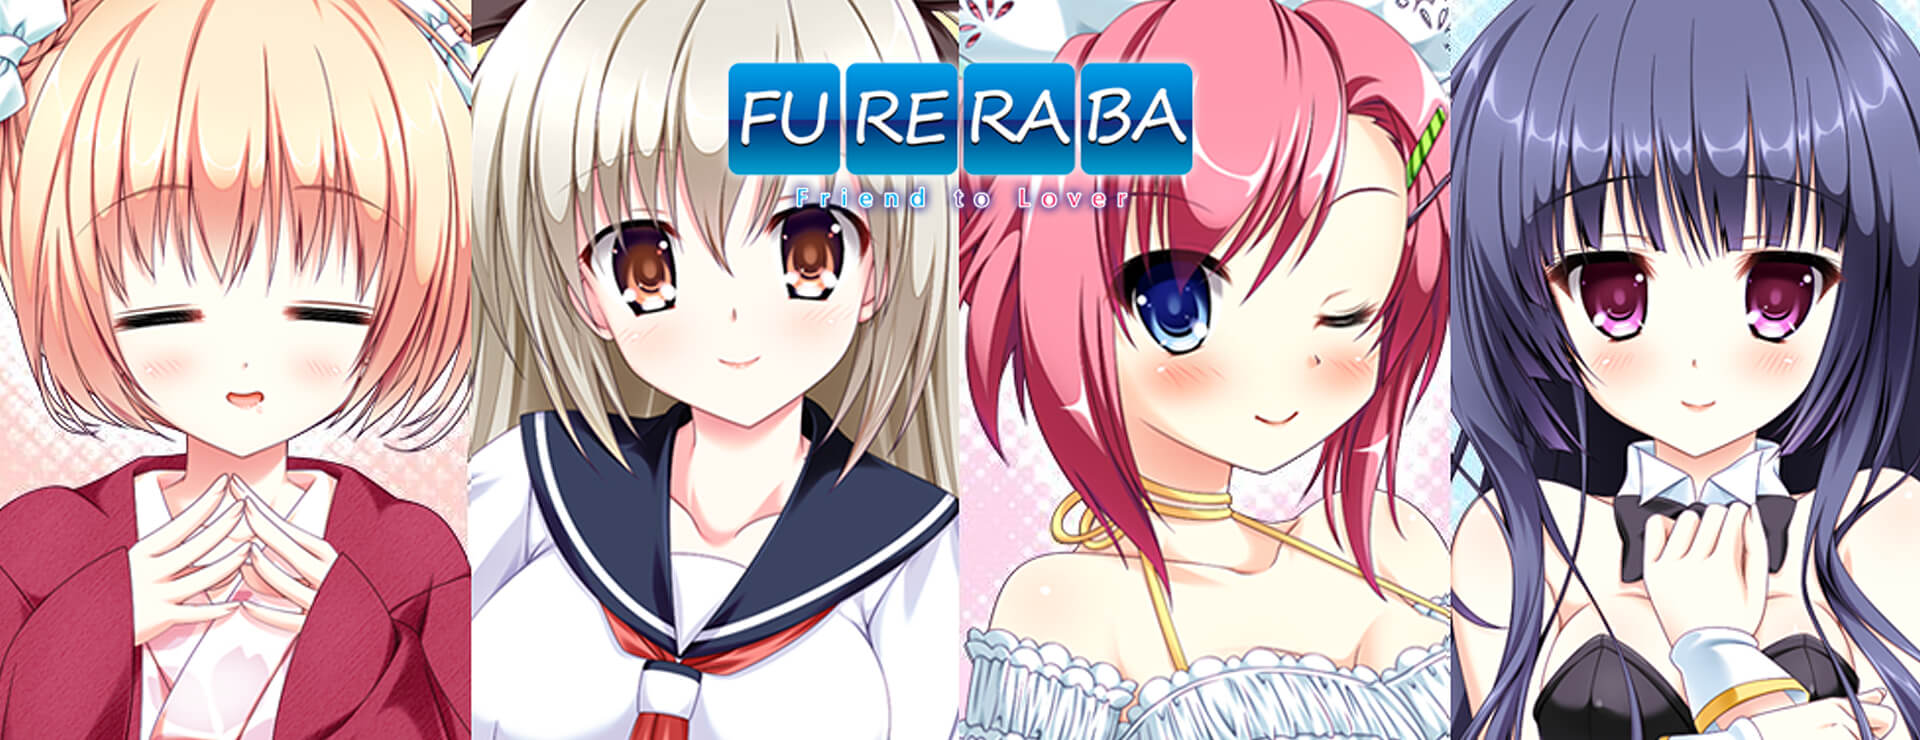 Fureraba: After Stories DLC - ビジュアルノベル ゲーム